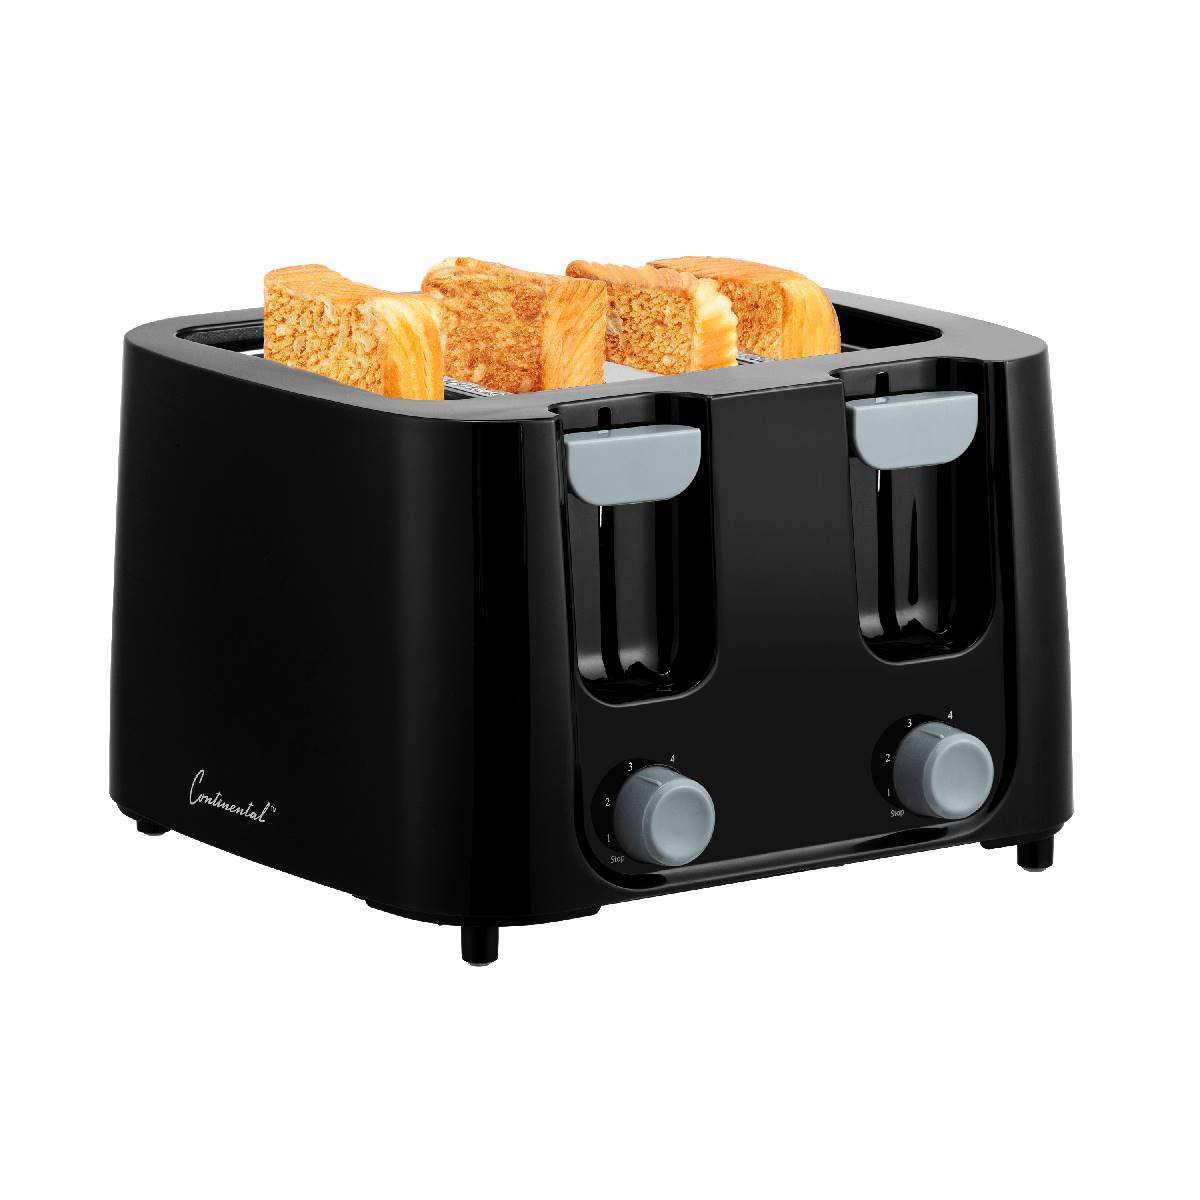 Continental(tm) 4 Slice Toaster